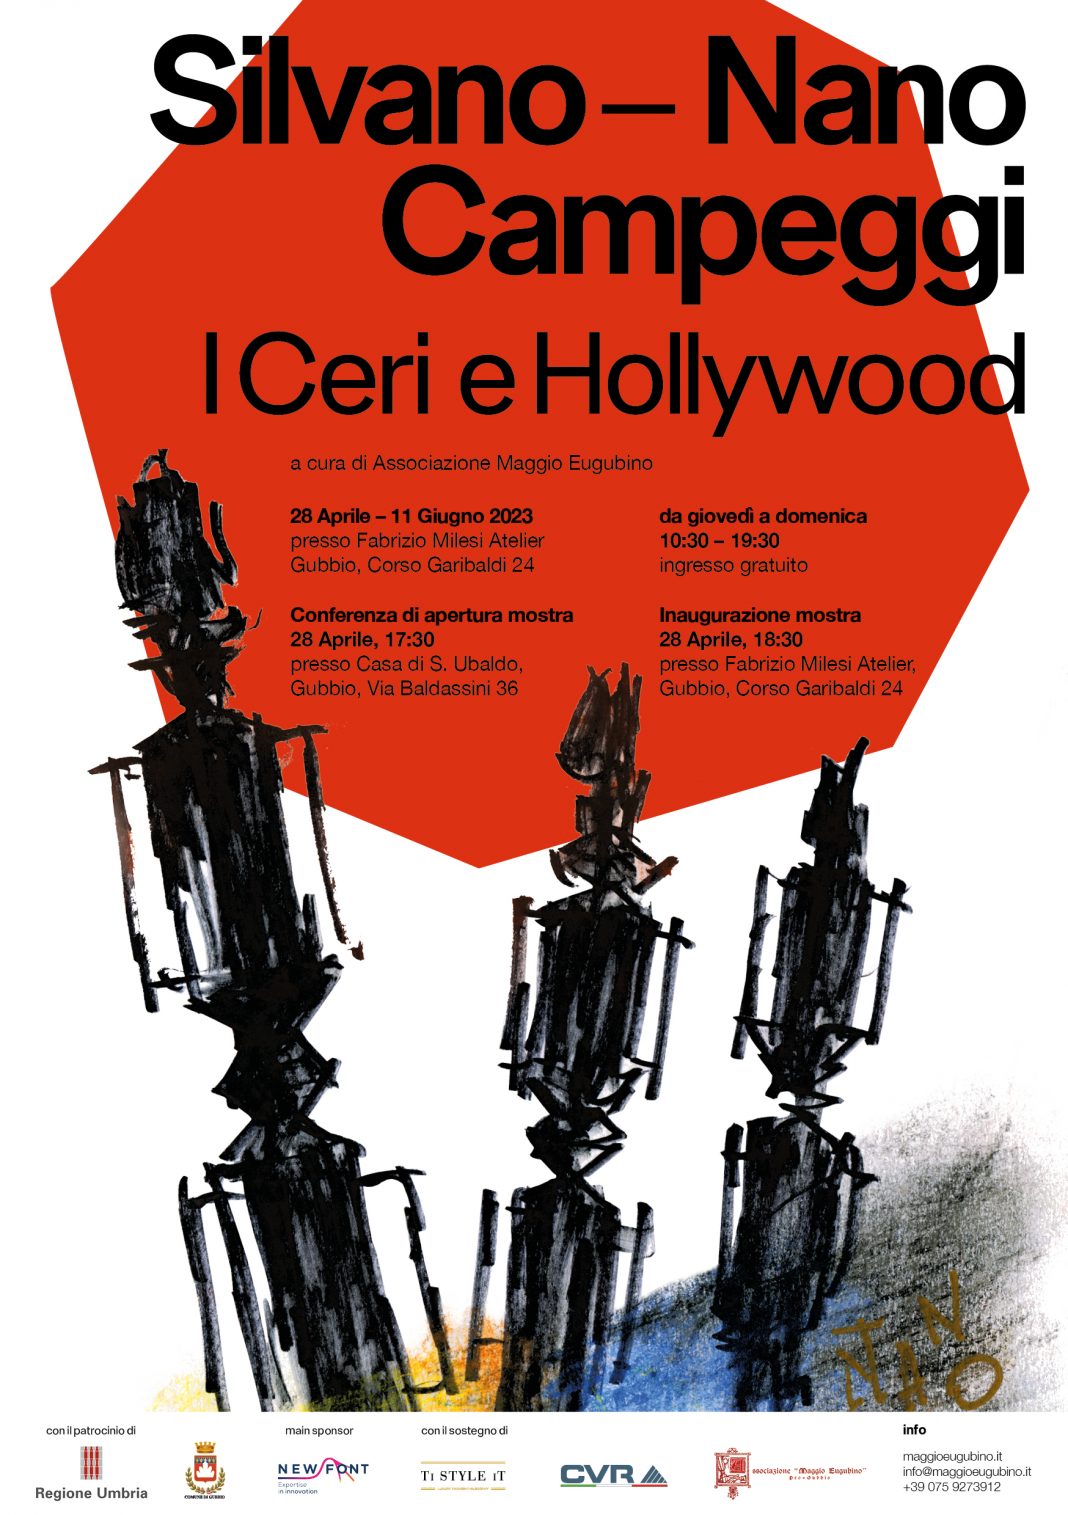 Silvano Nano Campeggi – I Ceri e Hollywoodhttps://www.exibart.com/repository/media/formidable/11/img/0c9/LOCANDINA_EXIBART-1068x1515.jpg